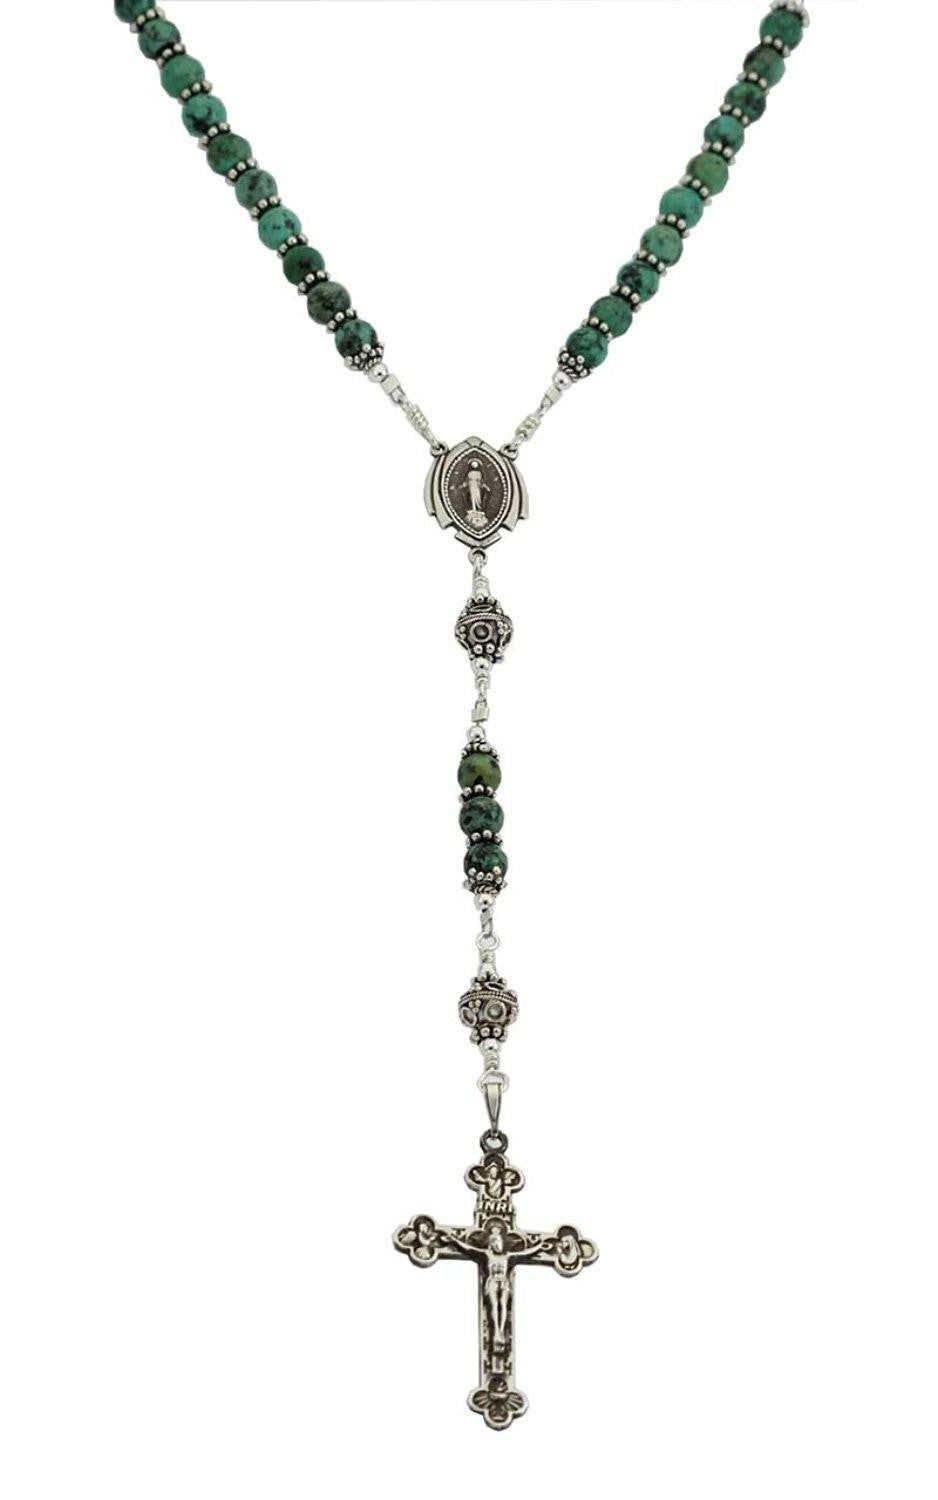 Vintage Jade Necklace Hand Made Sterling Silver Beeds 23 1/2 long